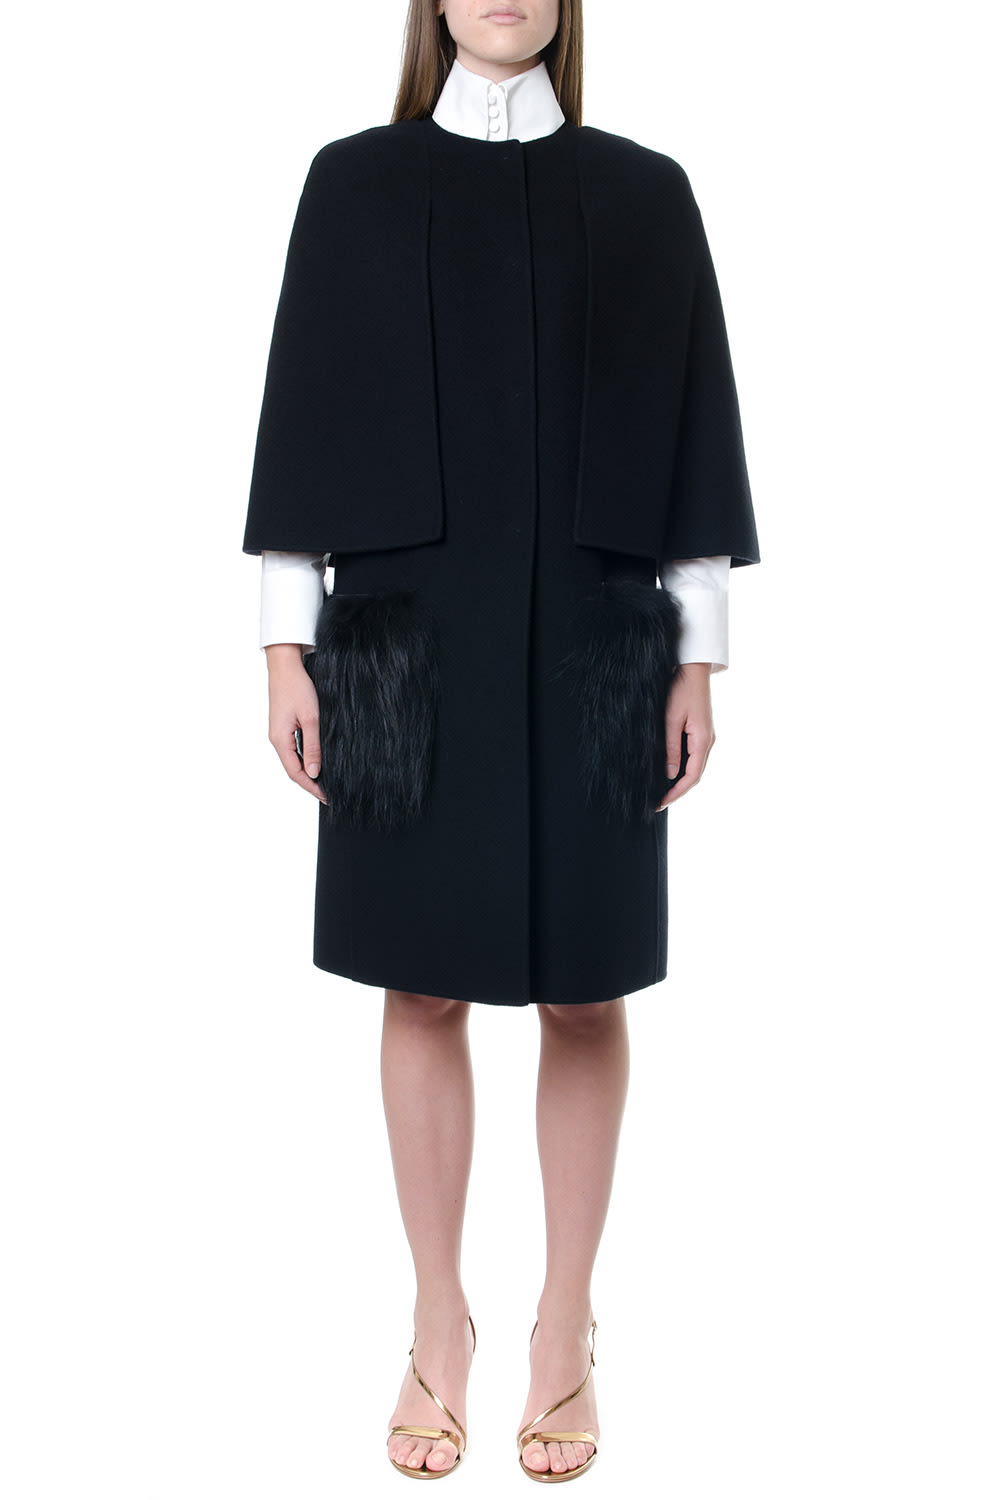 Fendi Black Virgin Wool Coat With Fox Fur Details